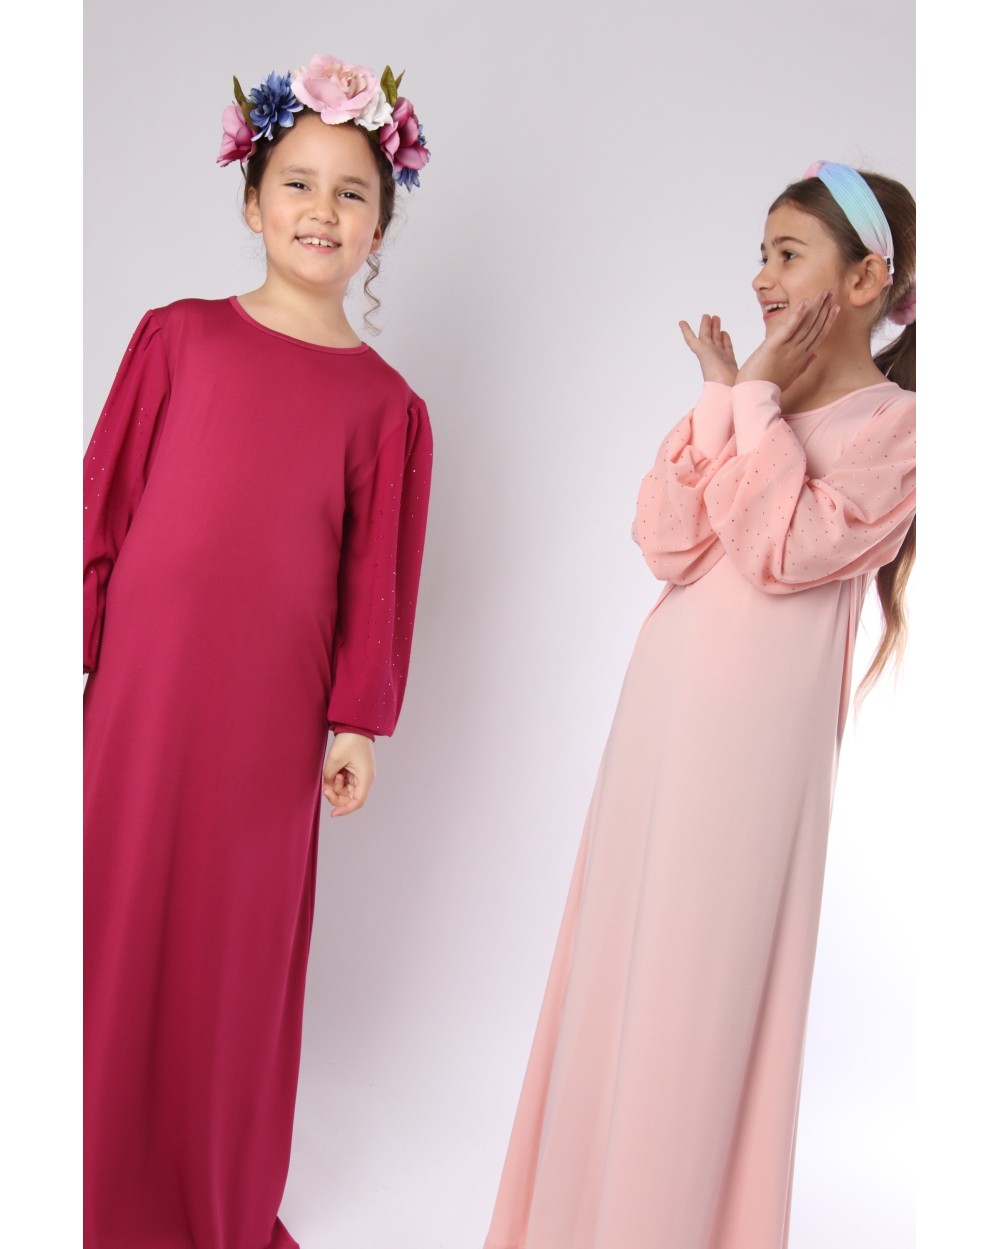 Rahma girl abaya dress